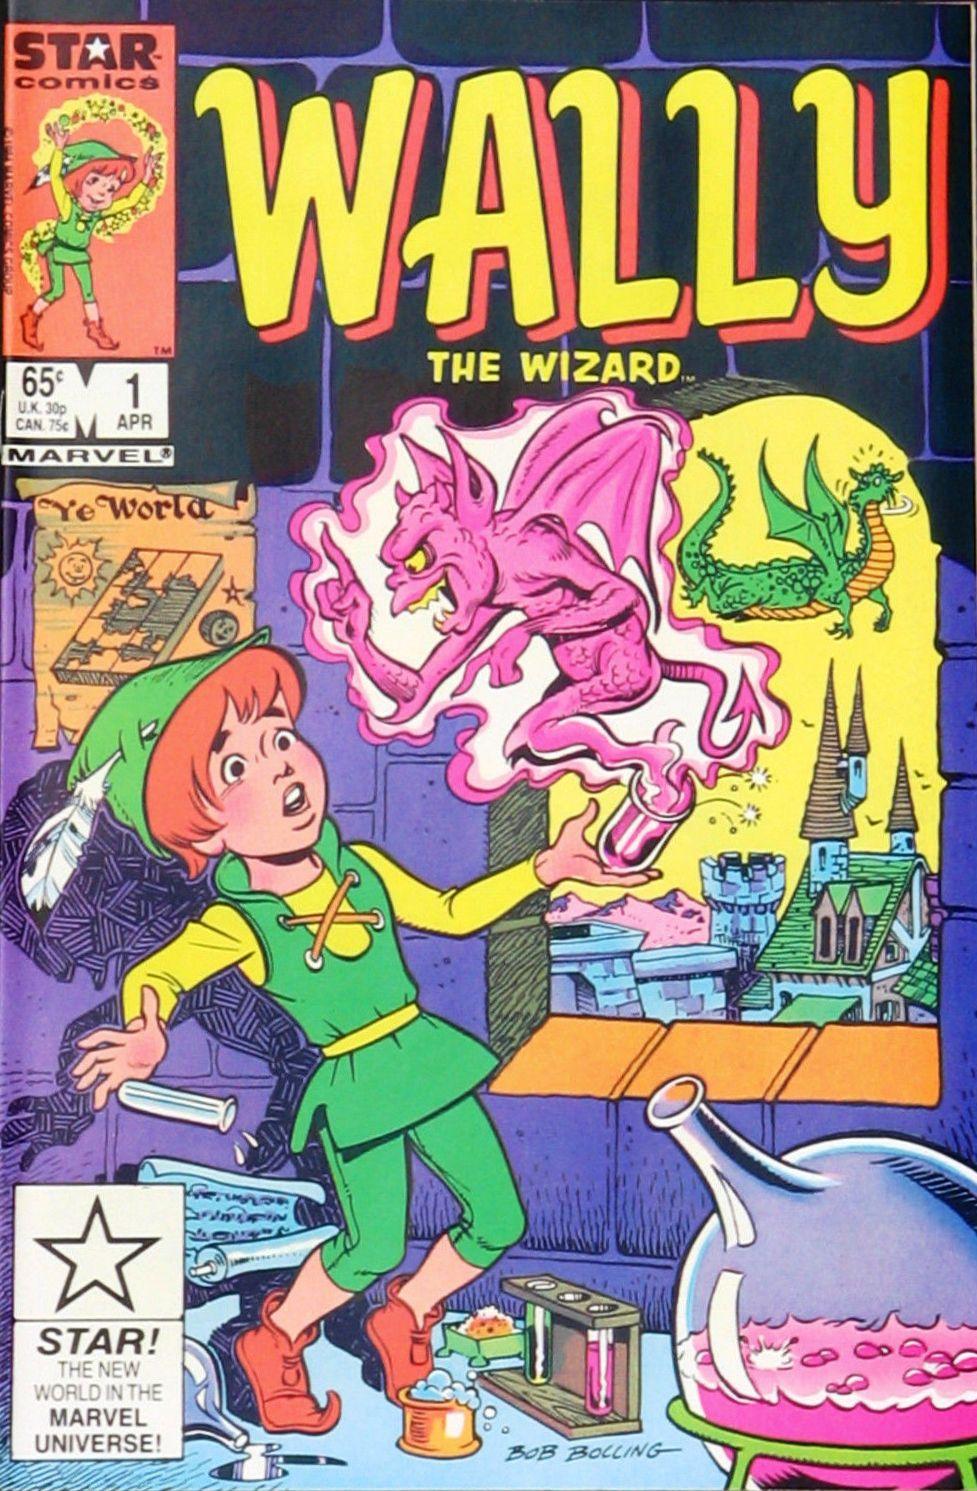 Wally the Wizard Vol. 1 #1